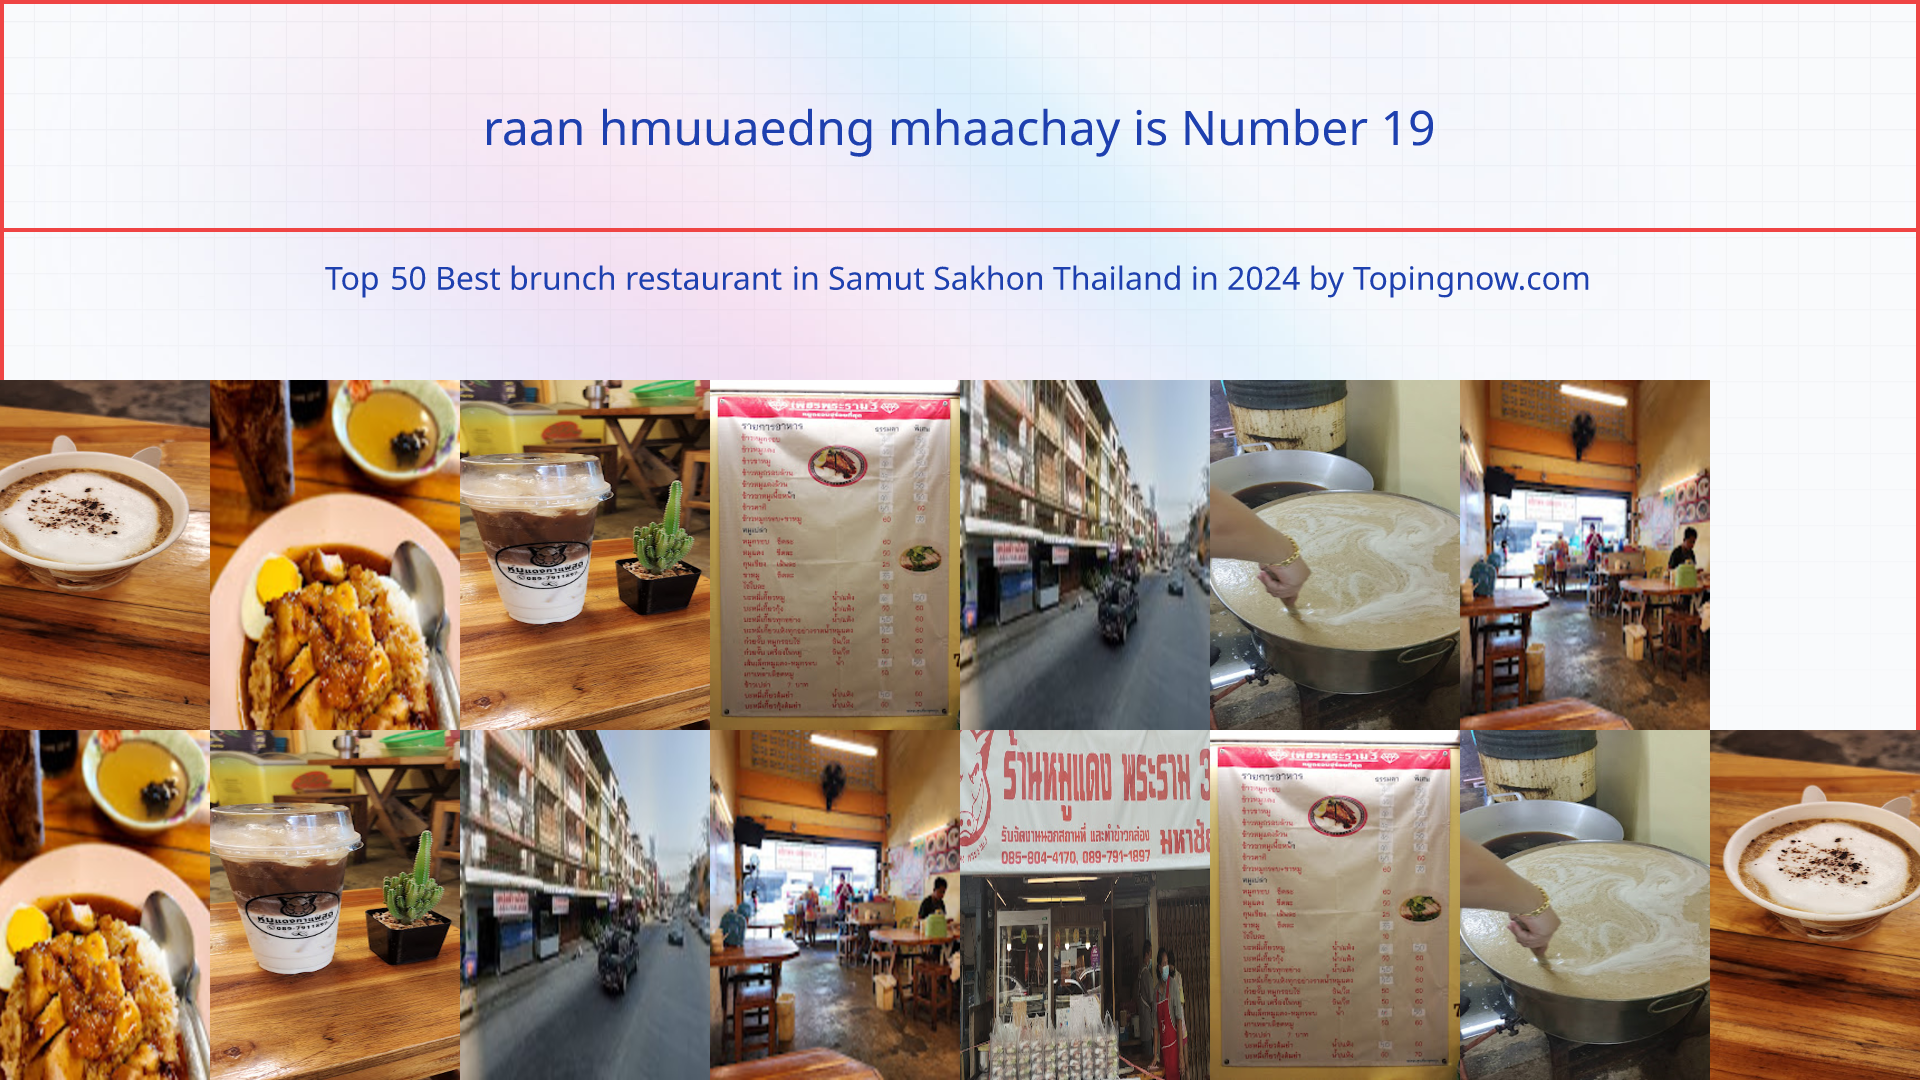 raan hmuuaedng mhaachay: Top 50 Best brunch restaurant in Samut Sakhon Thailand in 2024